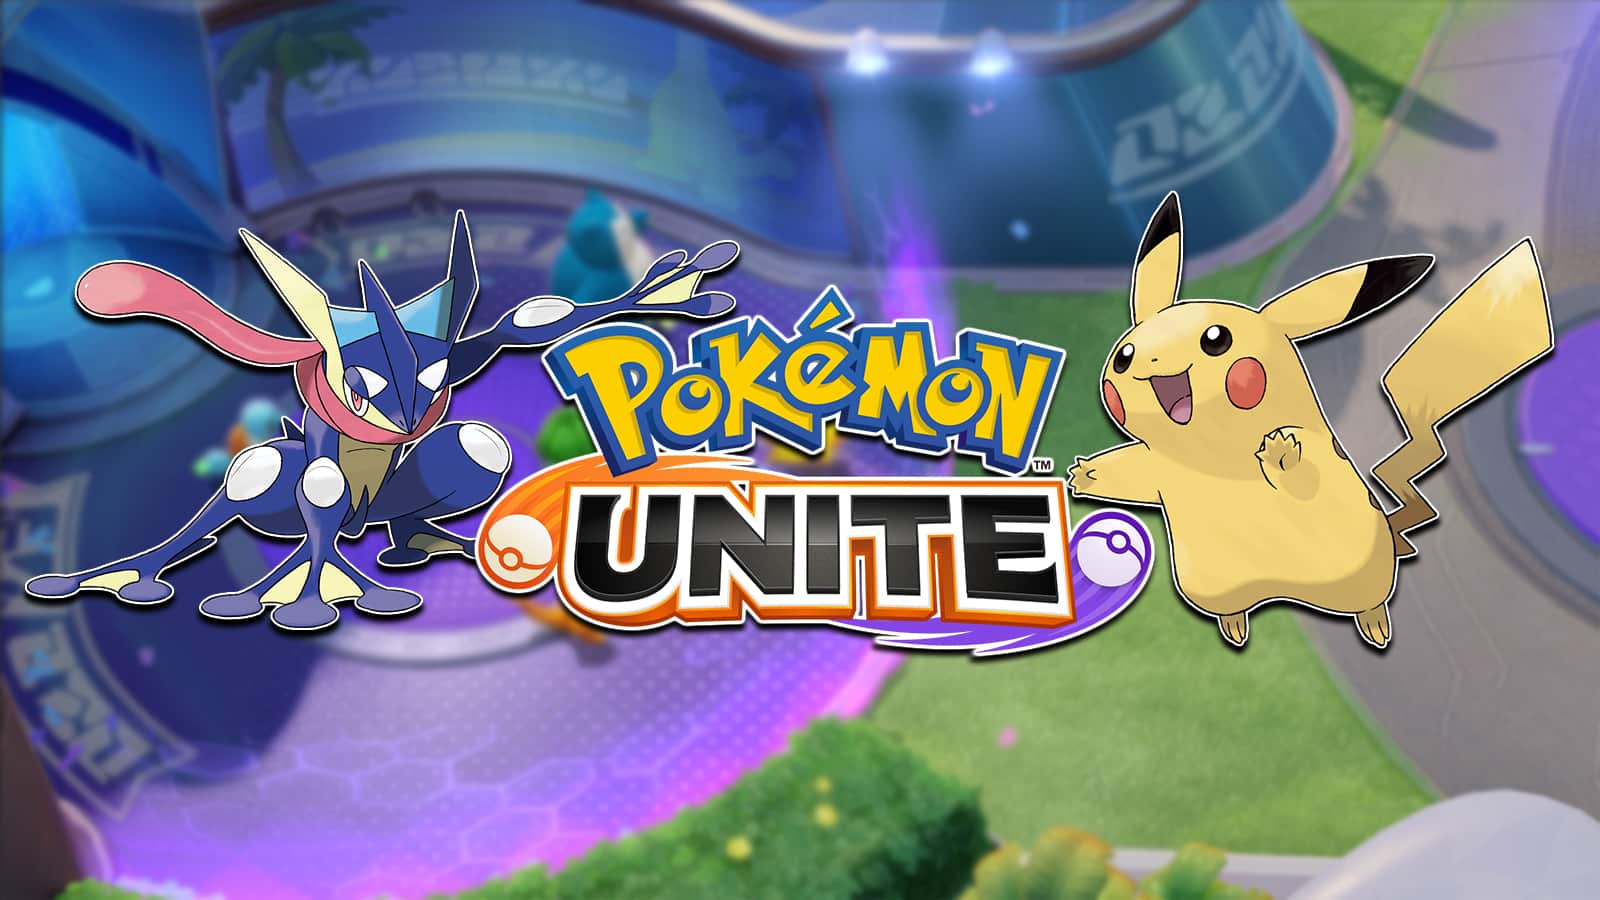 Pokémon UNITE Strategy: Wild Pokémon Battle Tactics in 5-on-5 Battles